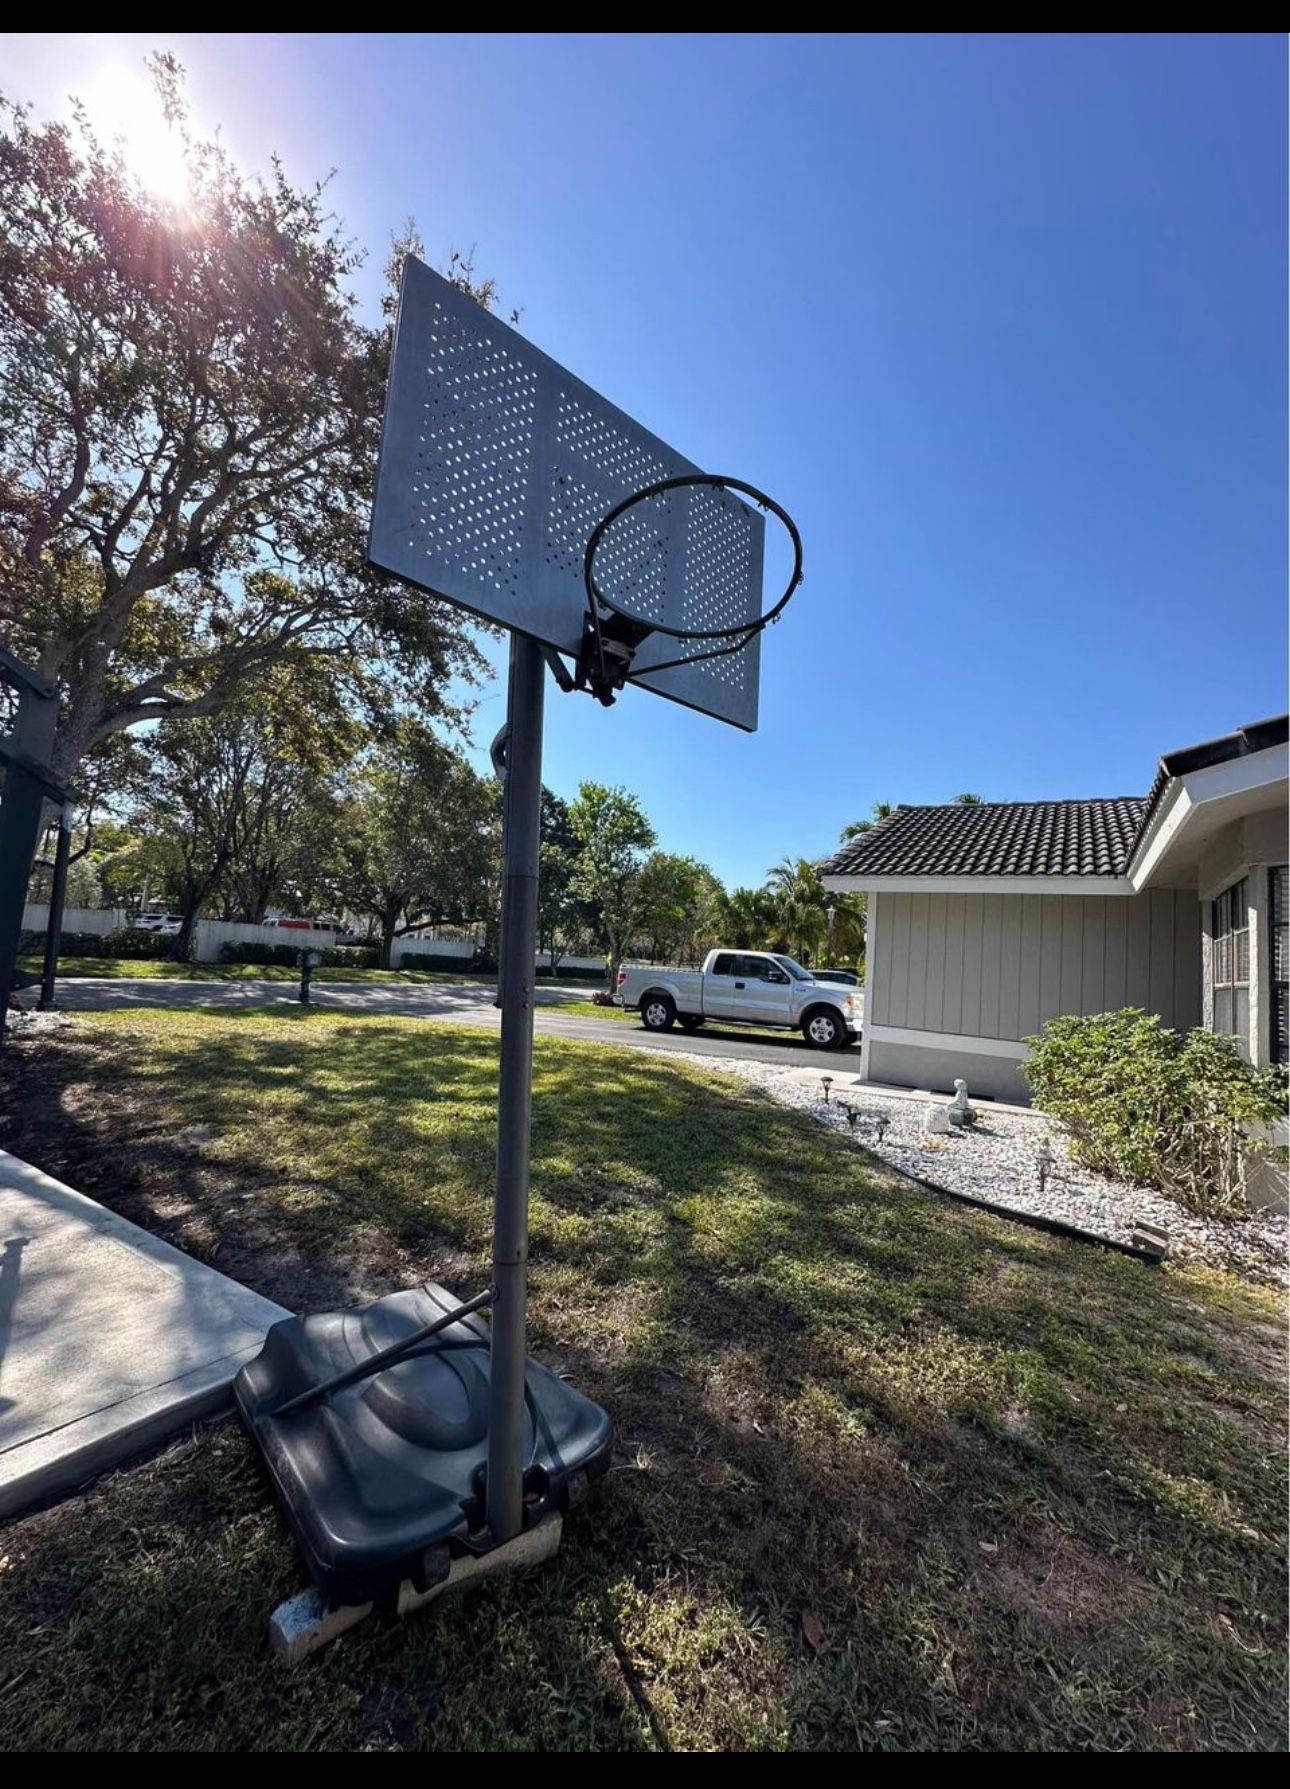 Used Basketball Hoop 